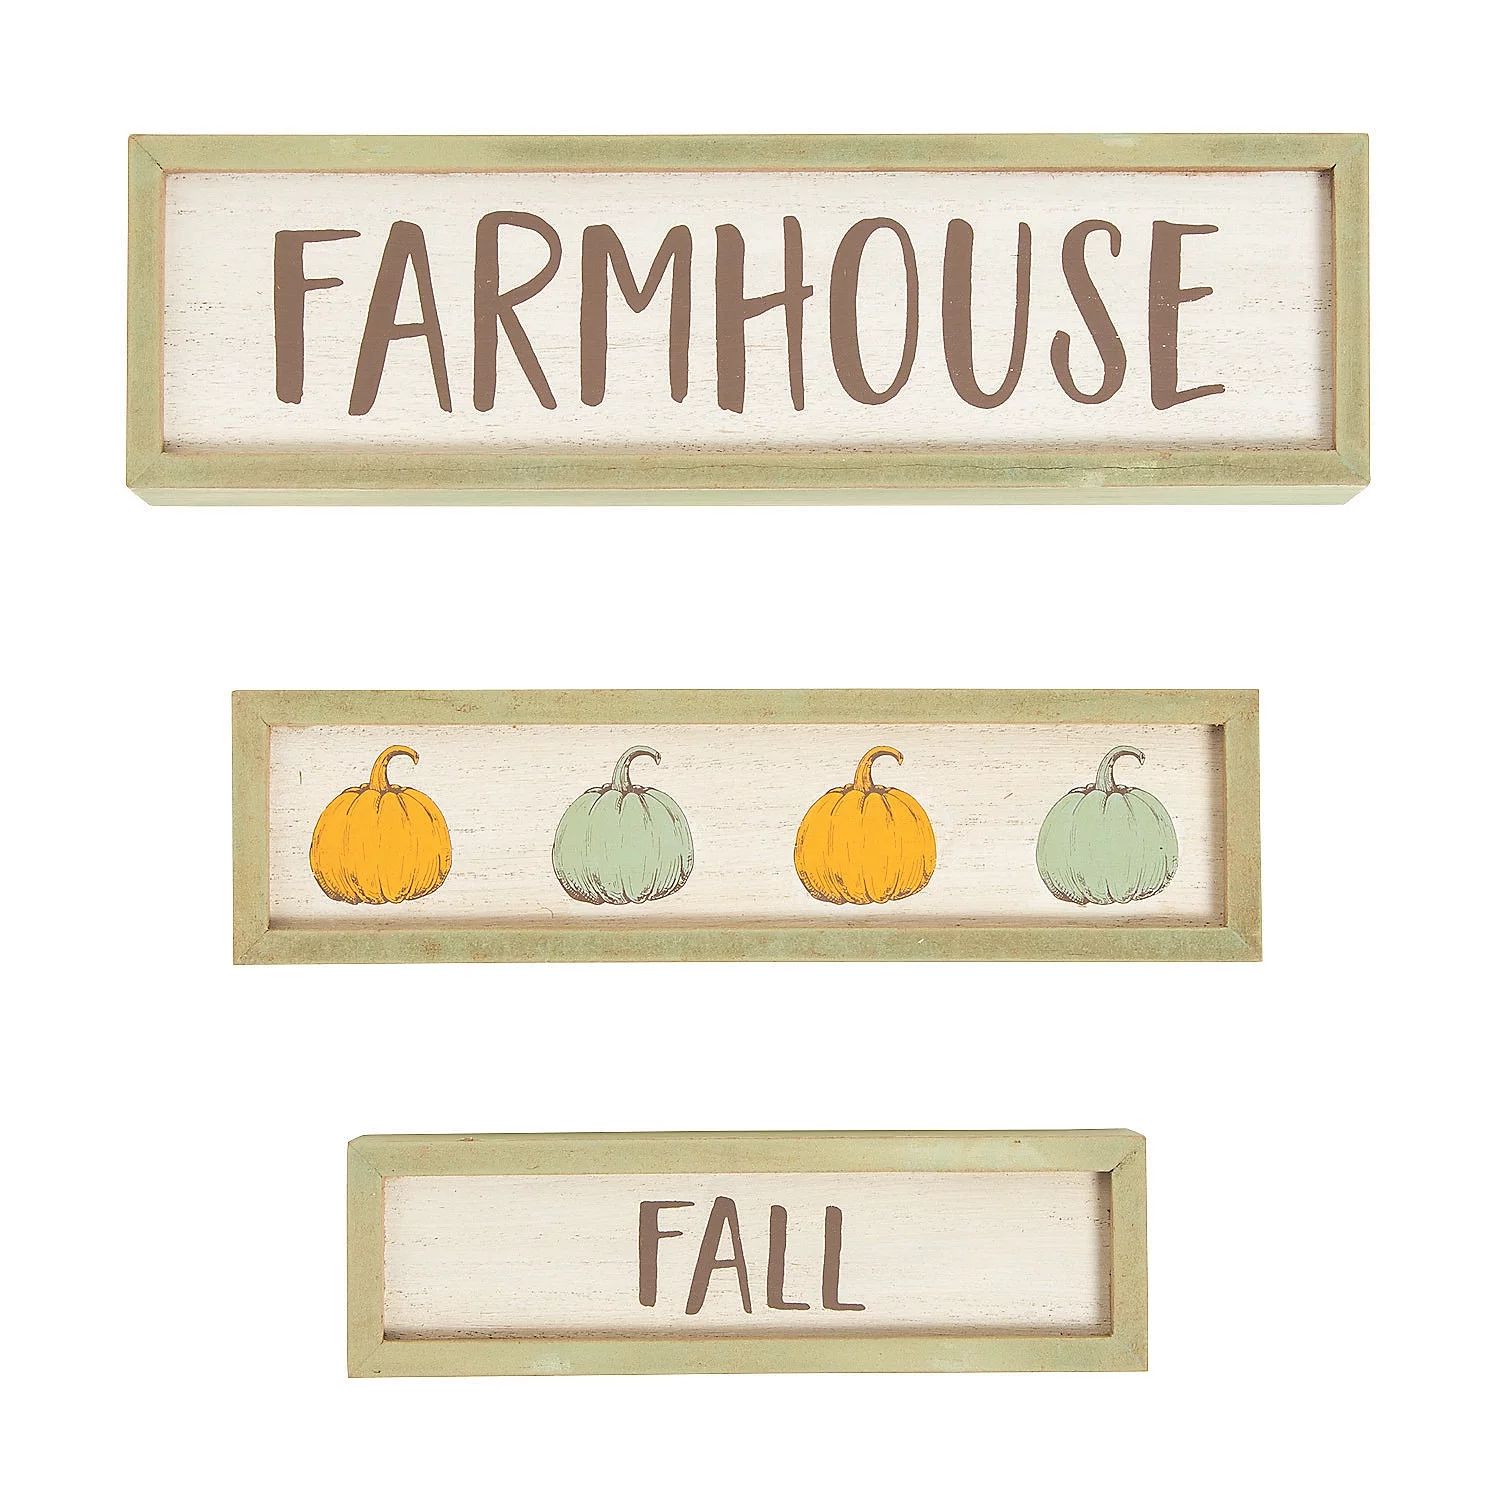 Farmhouse Fall Wood Tabletop Blocks - Home Decor - 3 Pieces | Walmart (US)